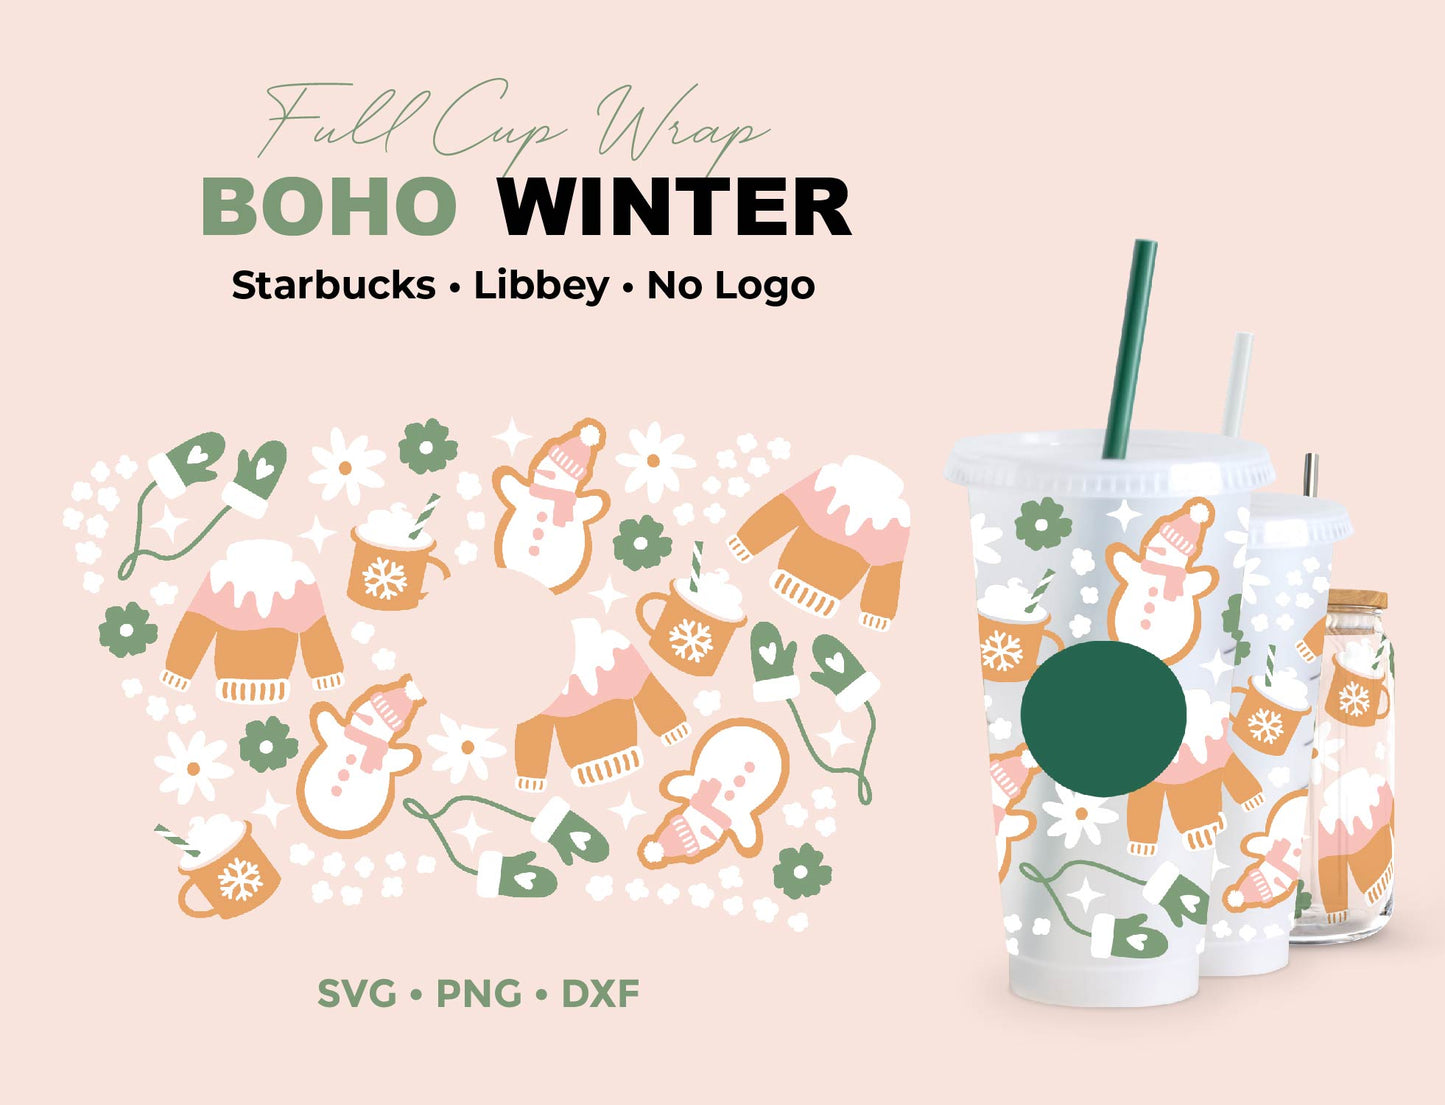 Boho Winter Wrap